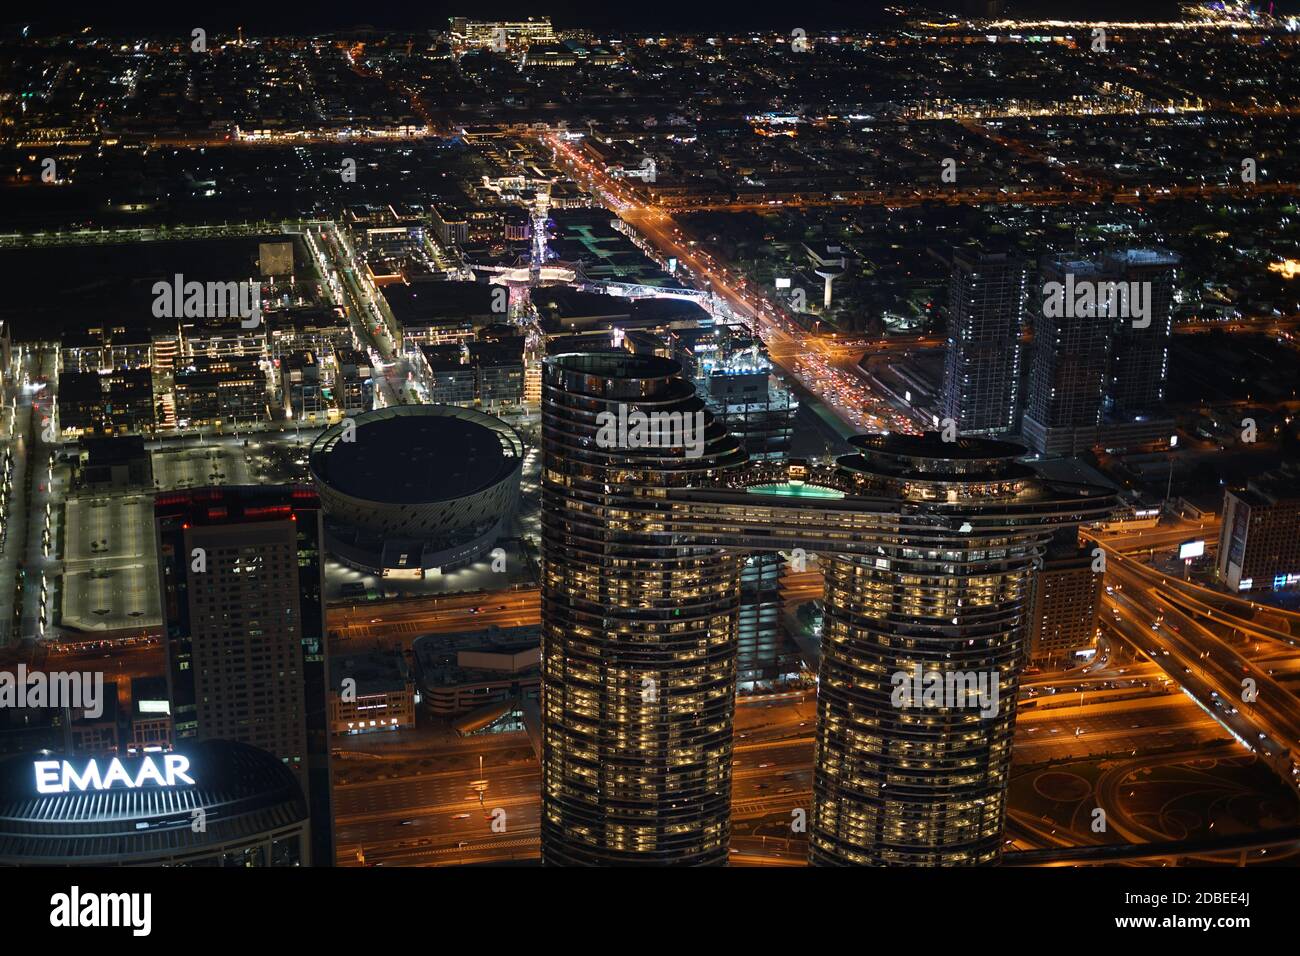 Dubai night view seen from the observation deck of Burj Khalifa. Shooting Location: Dubai Stock Photo